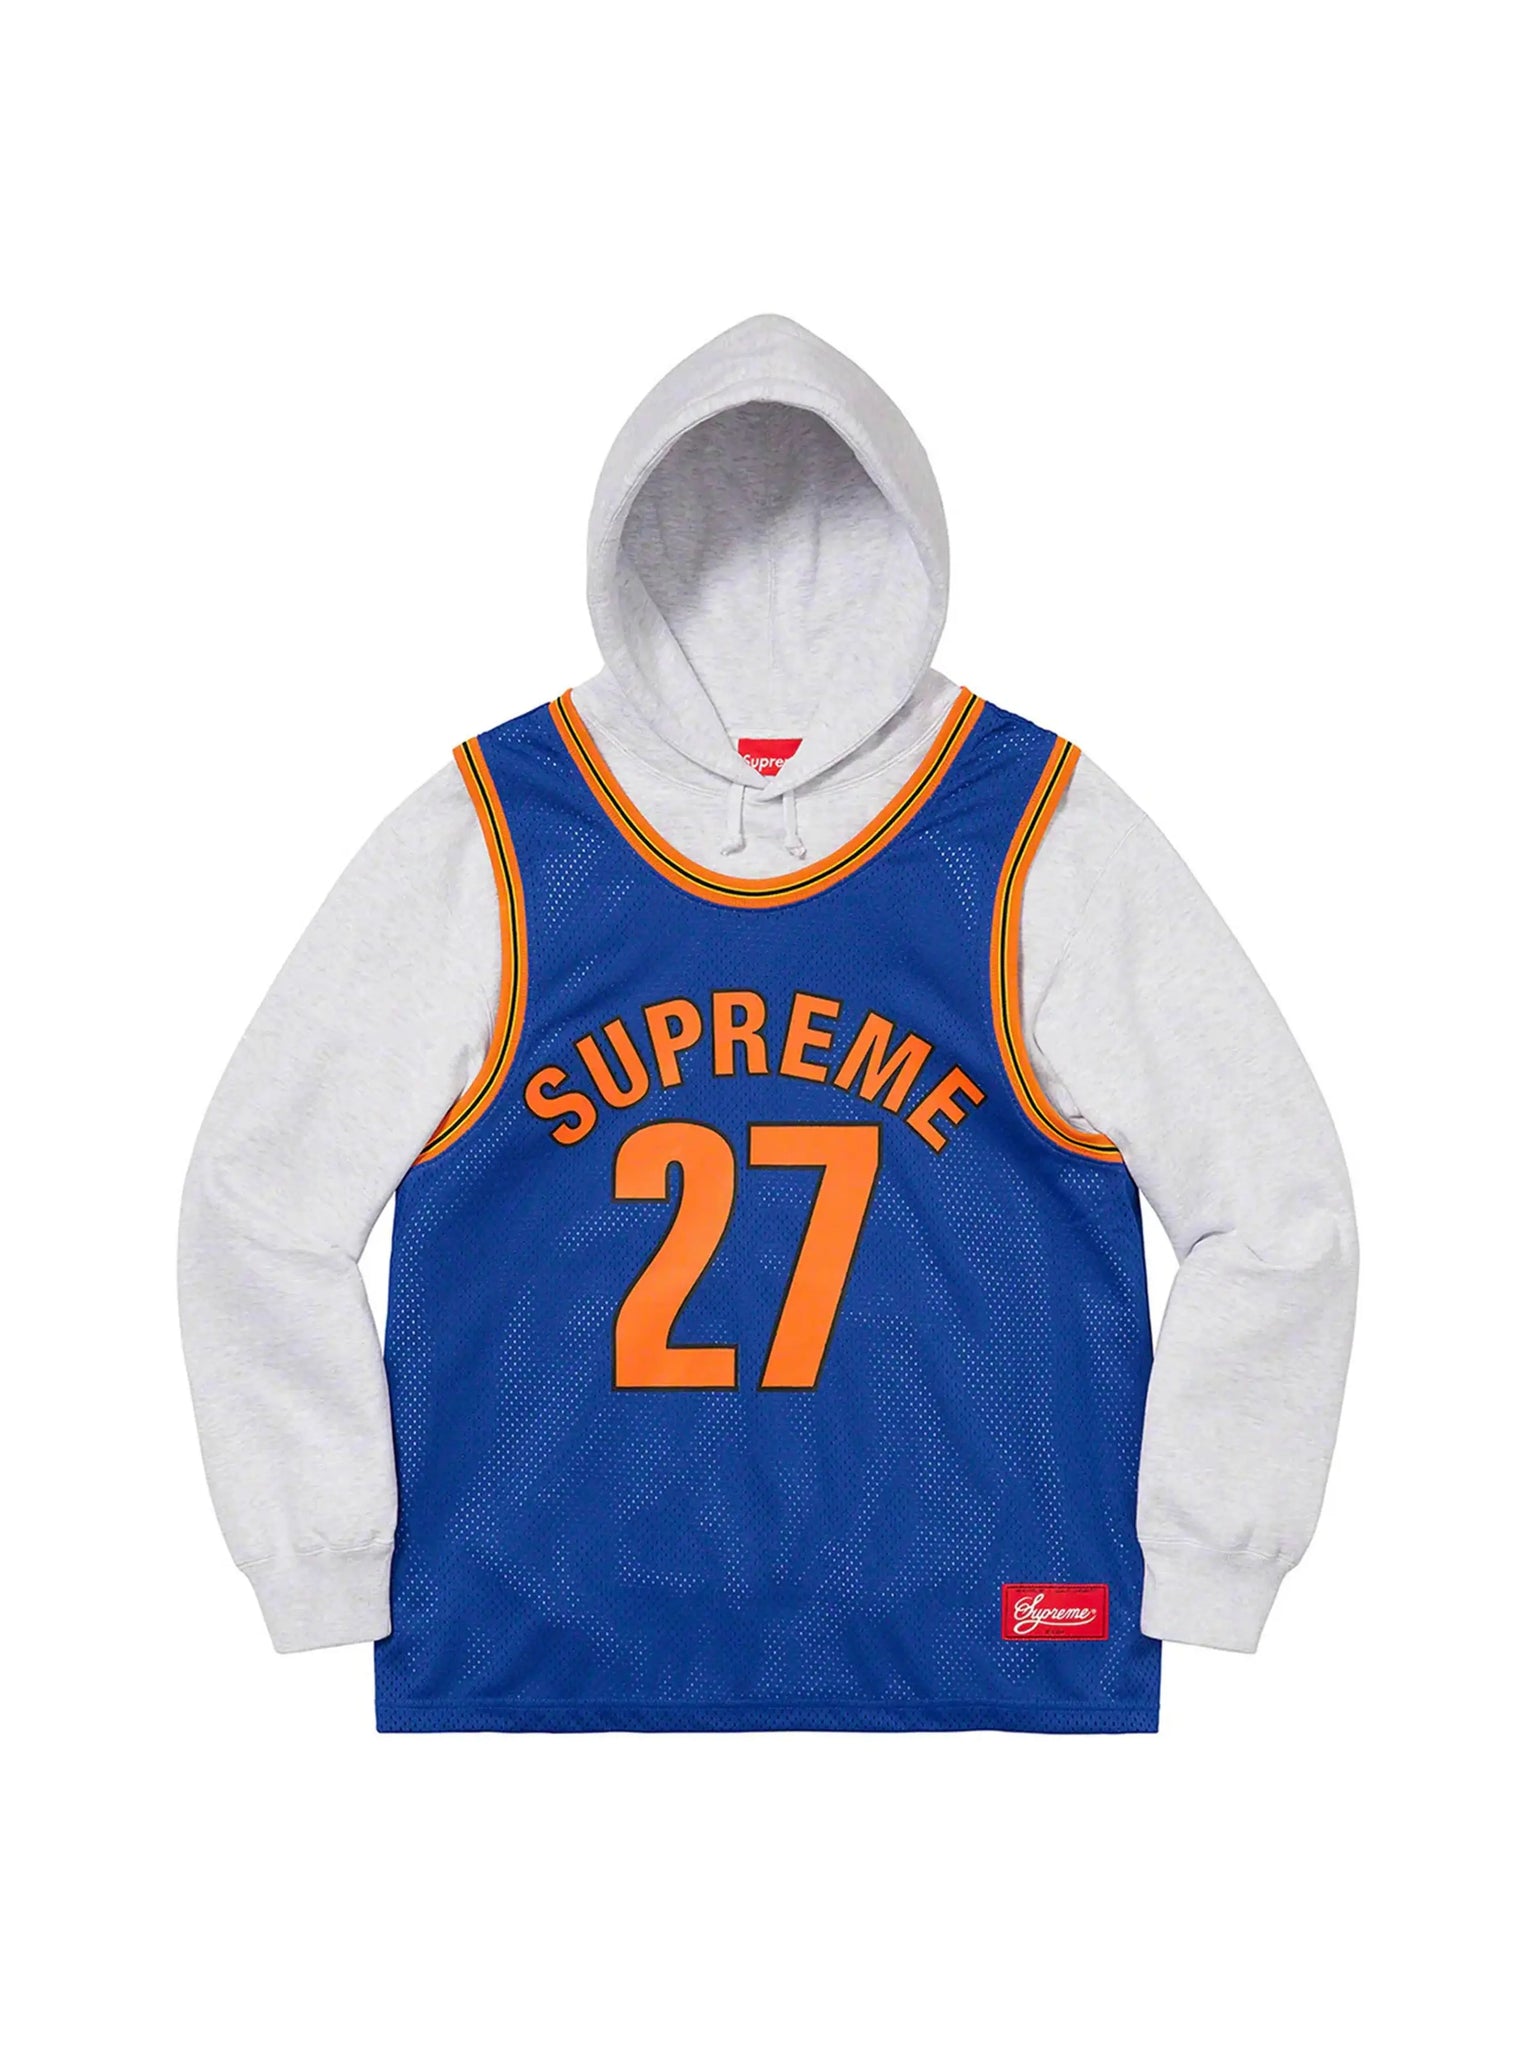 Supreme Basketball Jersey Hooded Sweatshirt Ash Grey in Auckland, New Zealand - Shop name